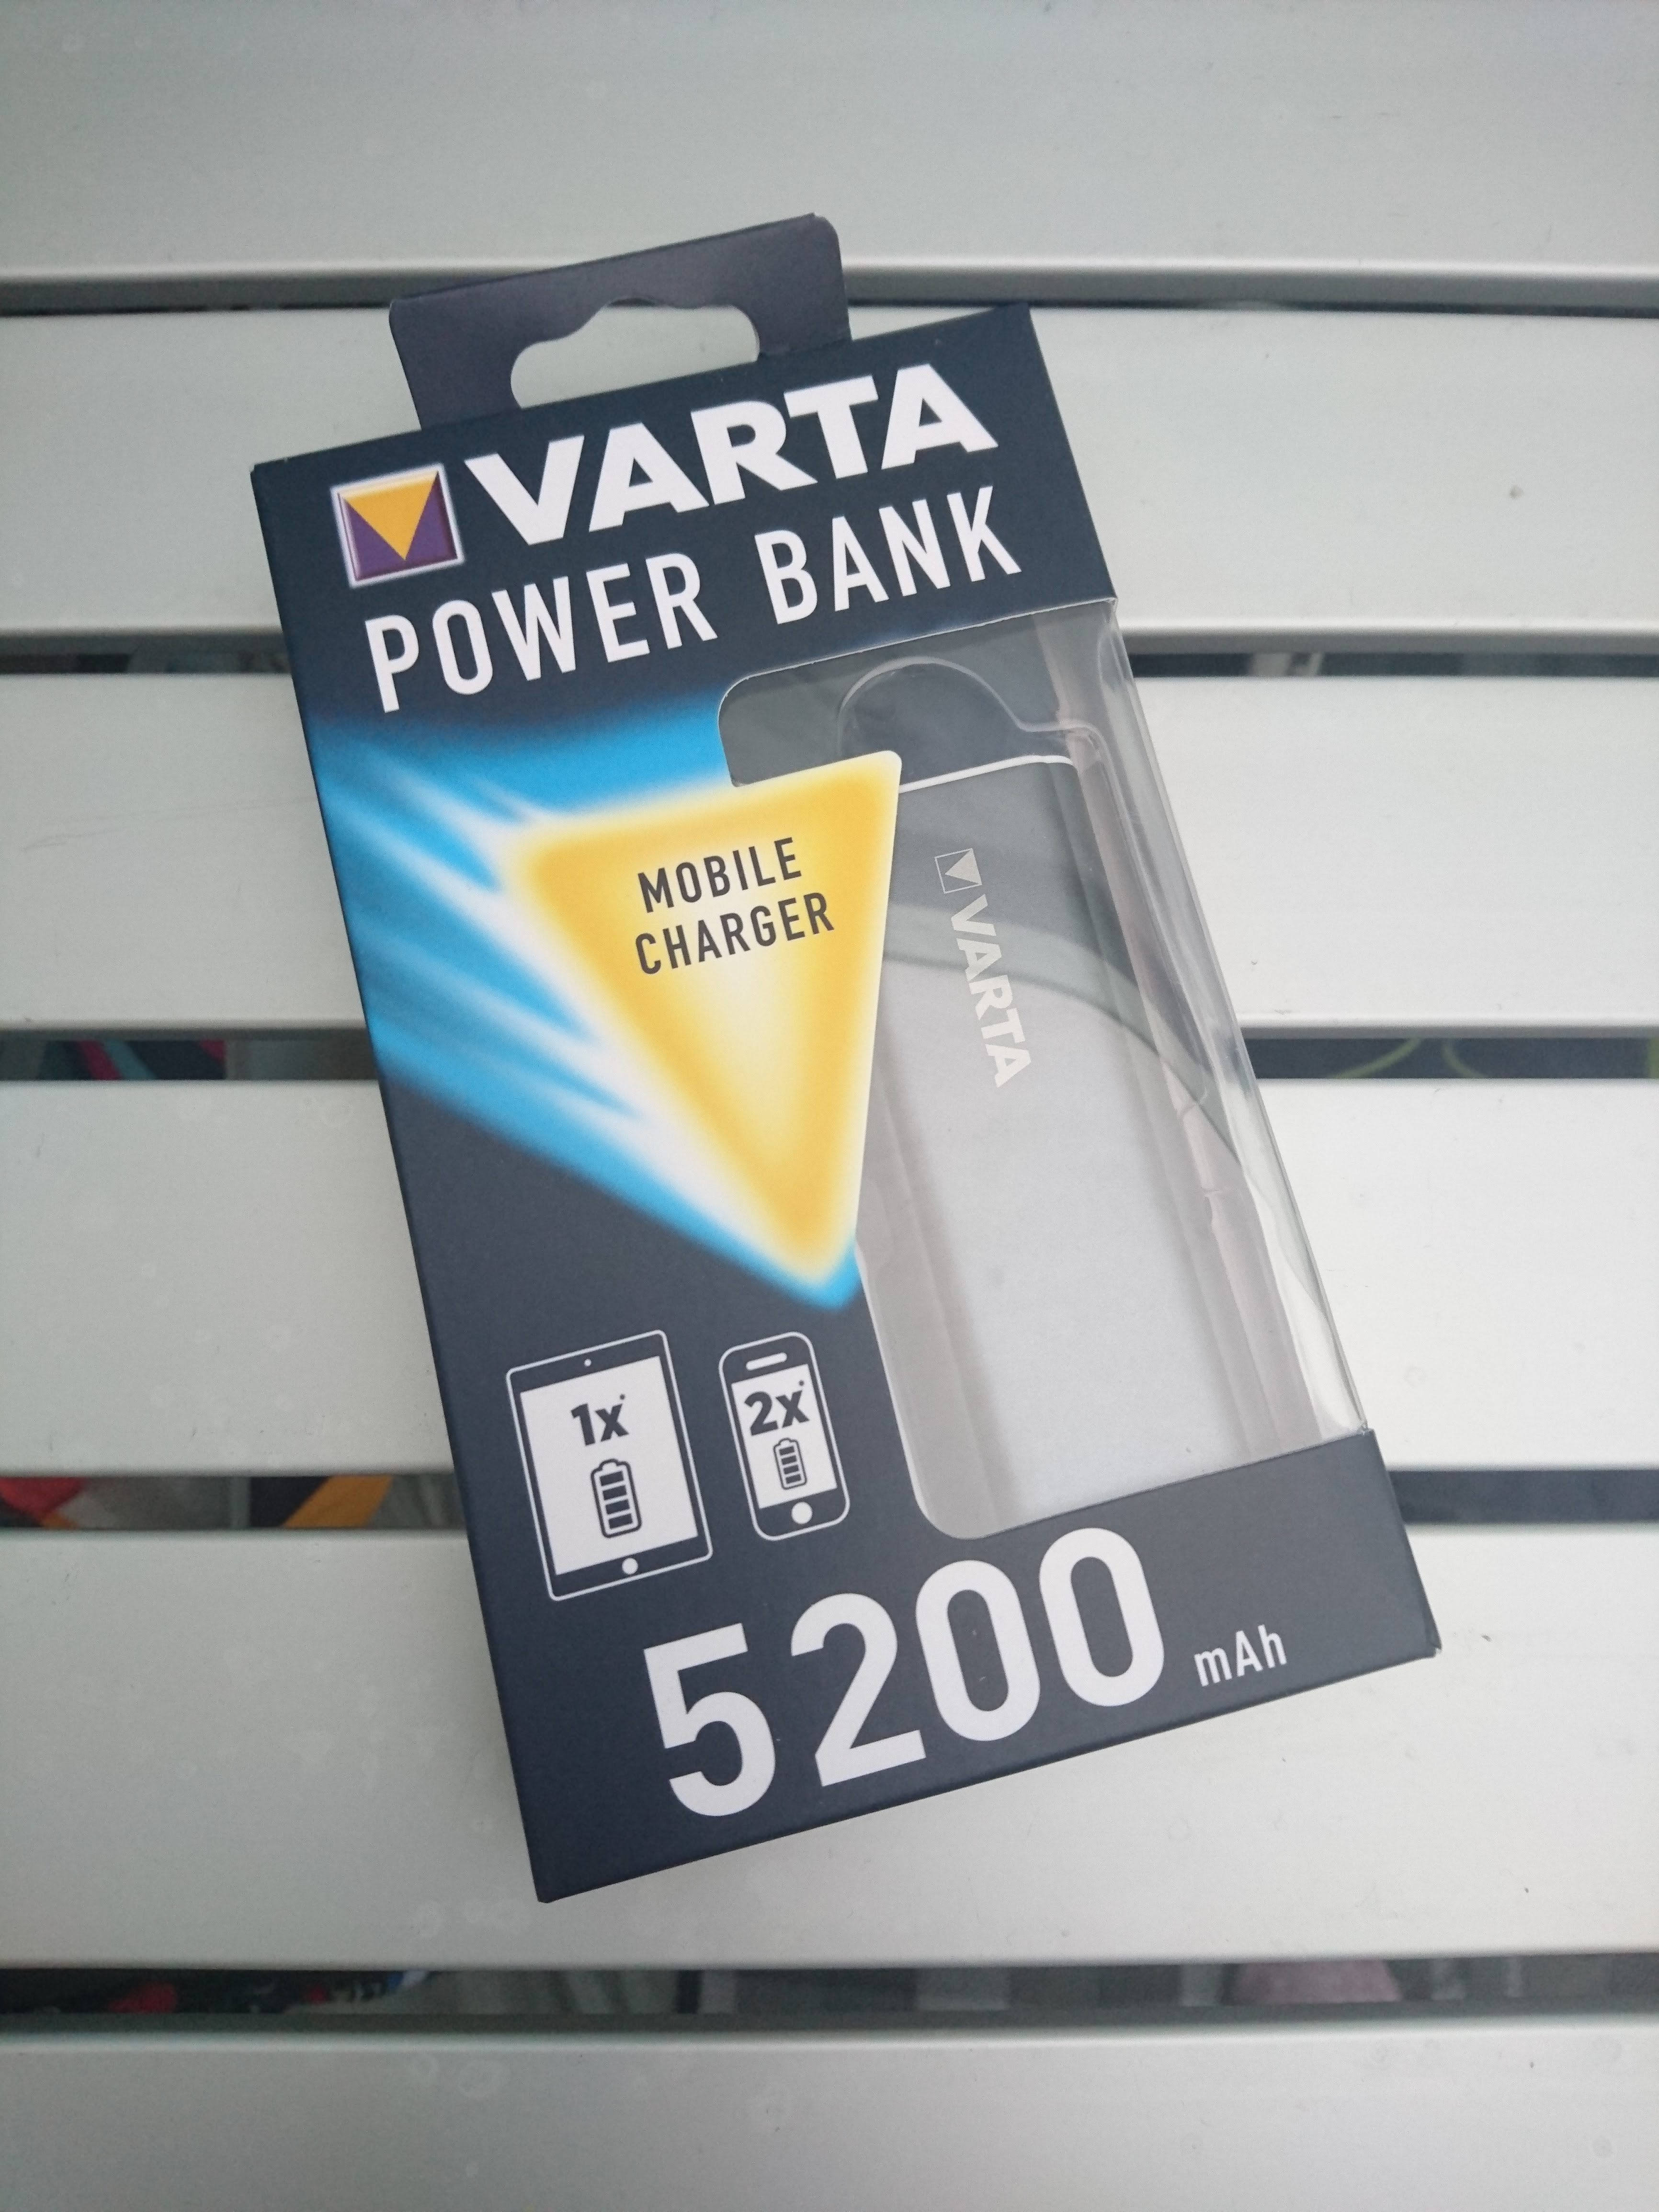 VARTA 5200 mAh Mobile Phone Power Bank Portable Charger